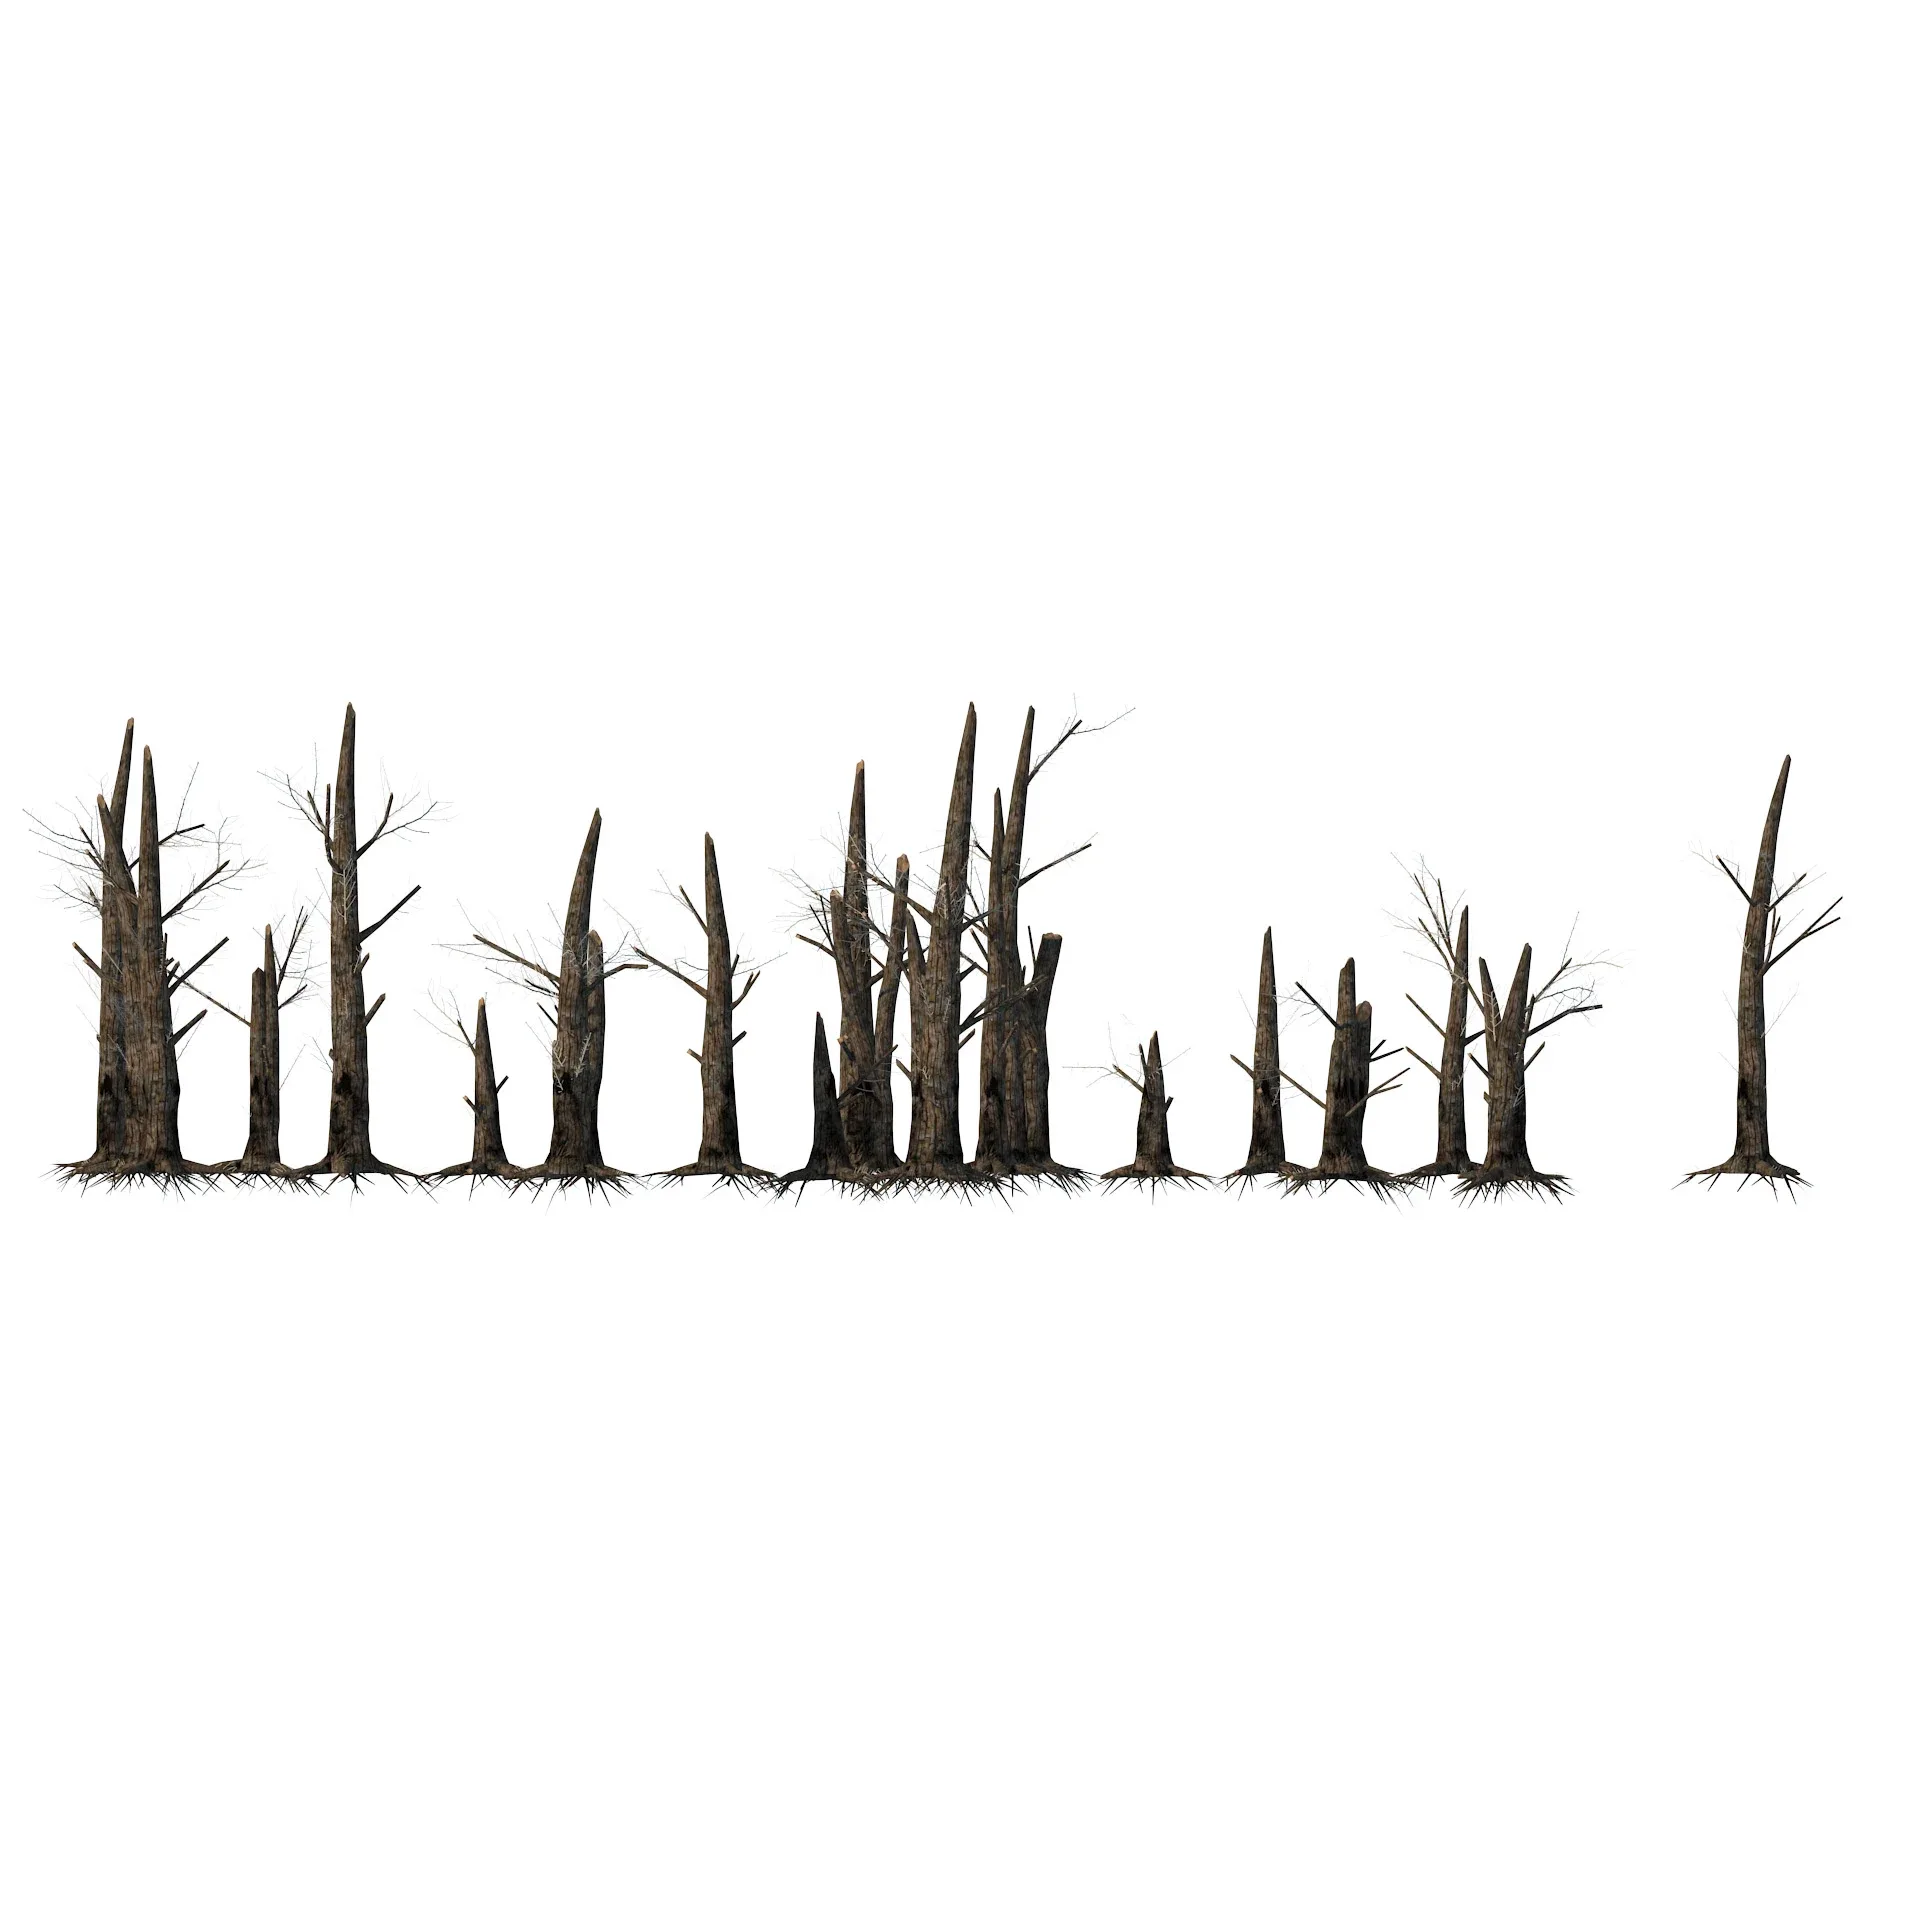 Fire-killed trees